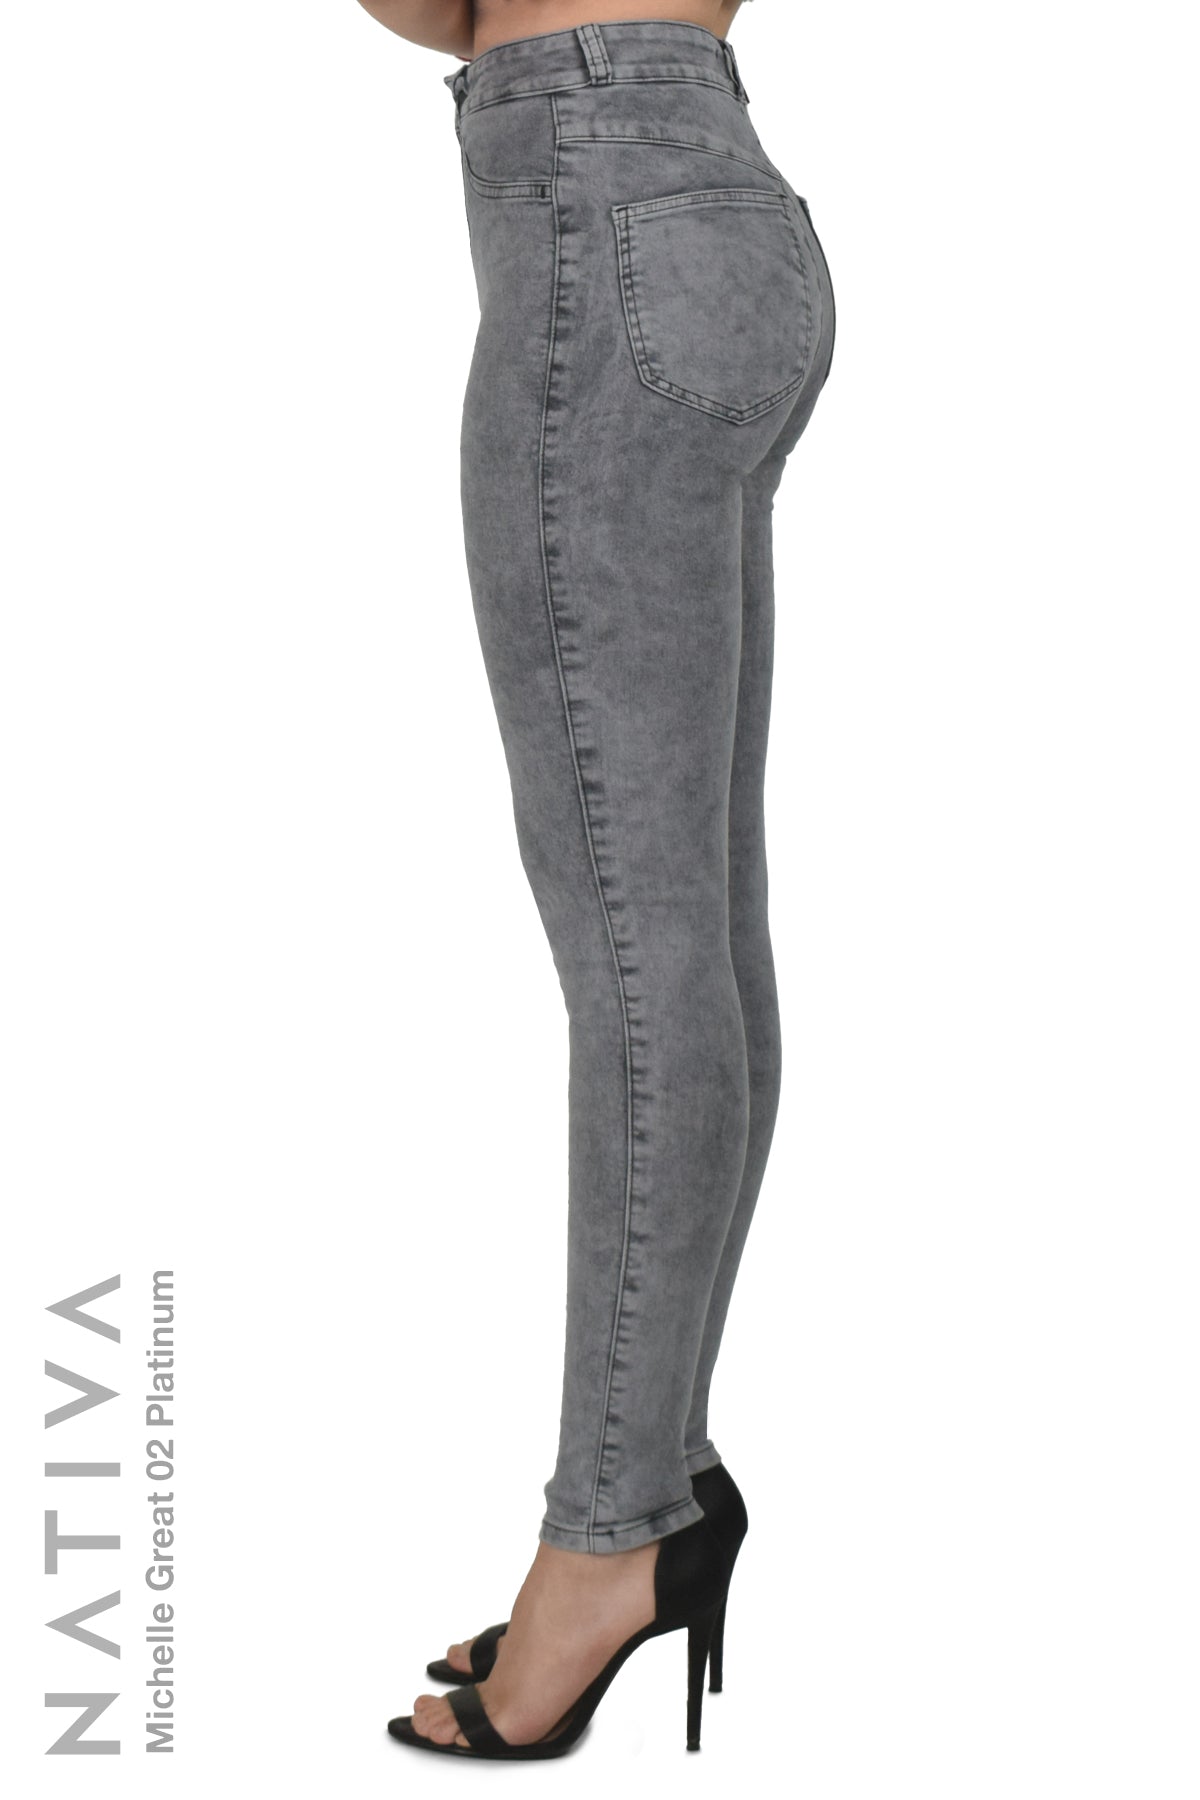 Buy Silvertraq Women's Yogini Stretch pants